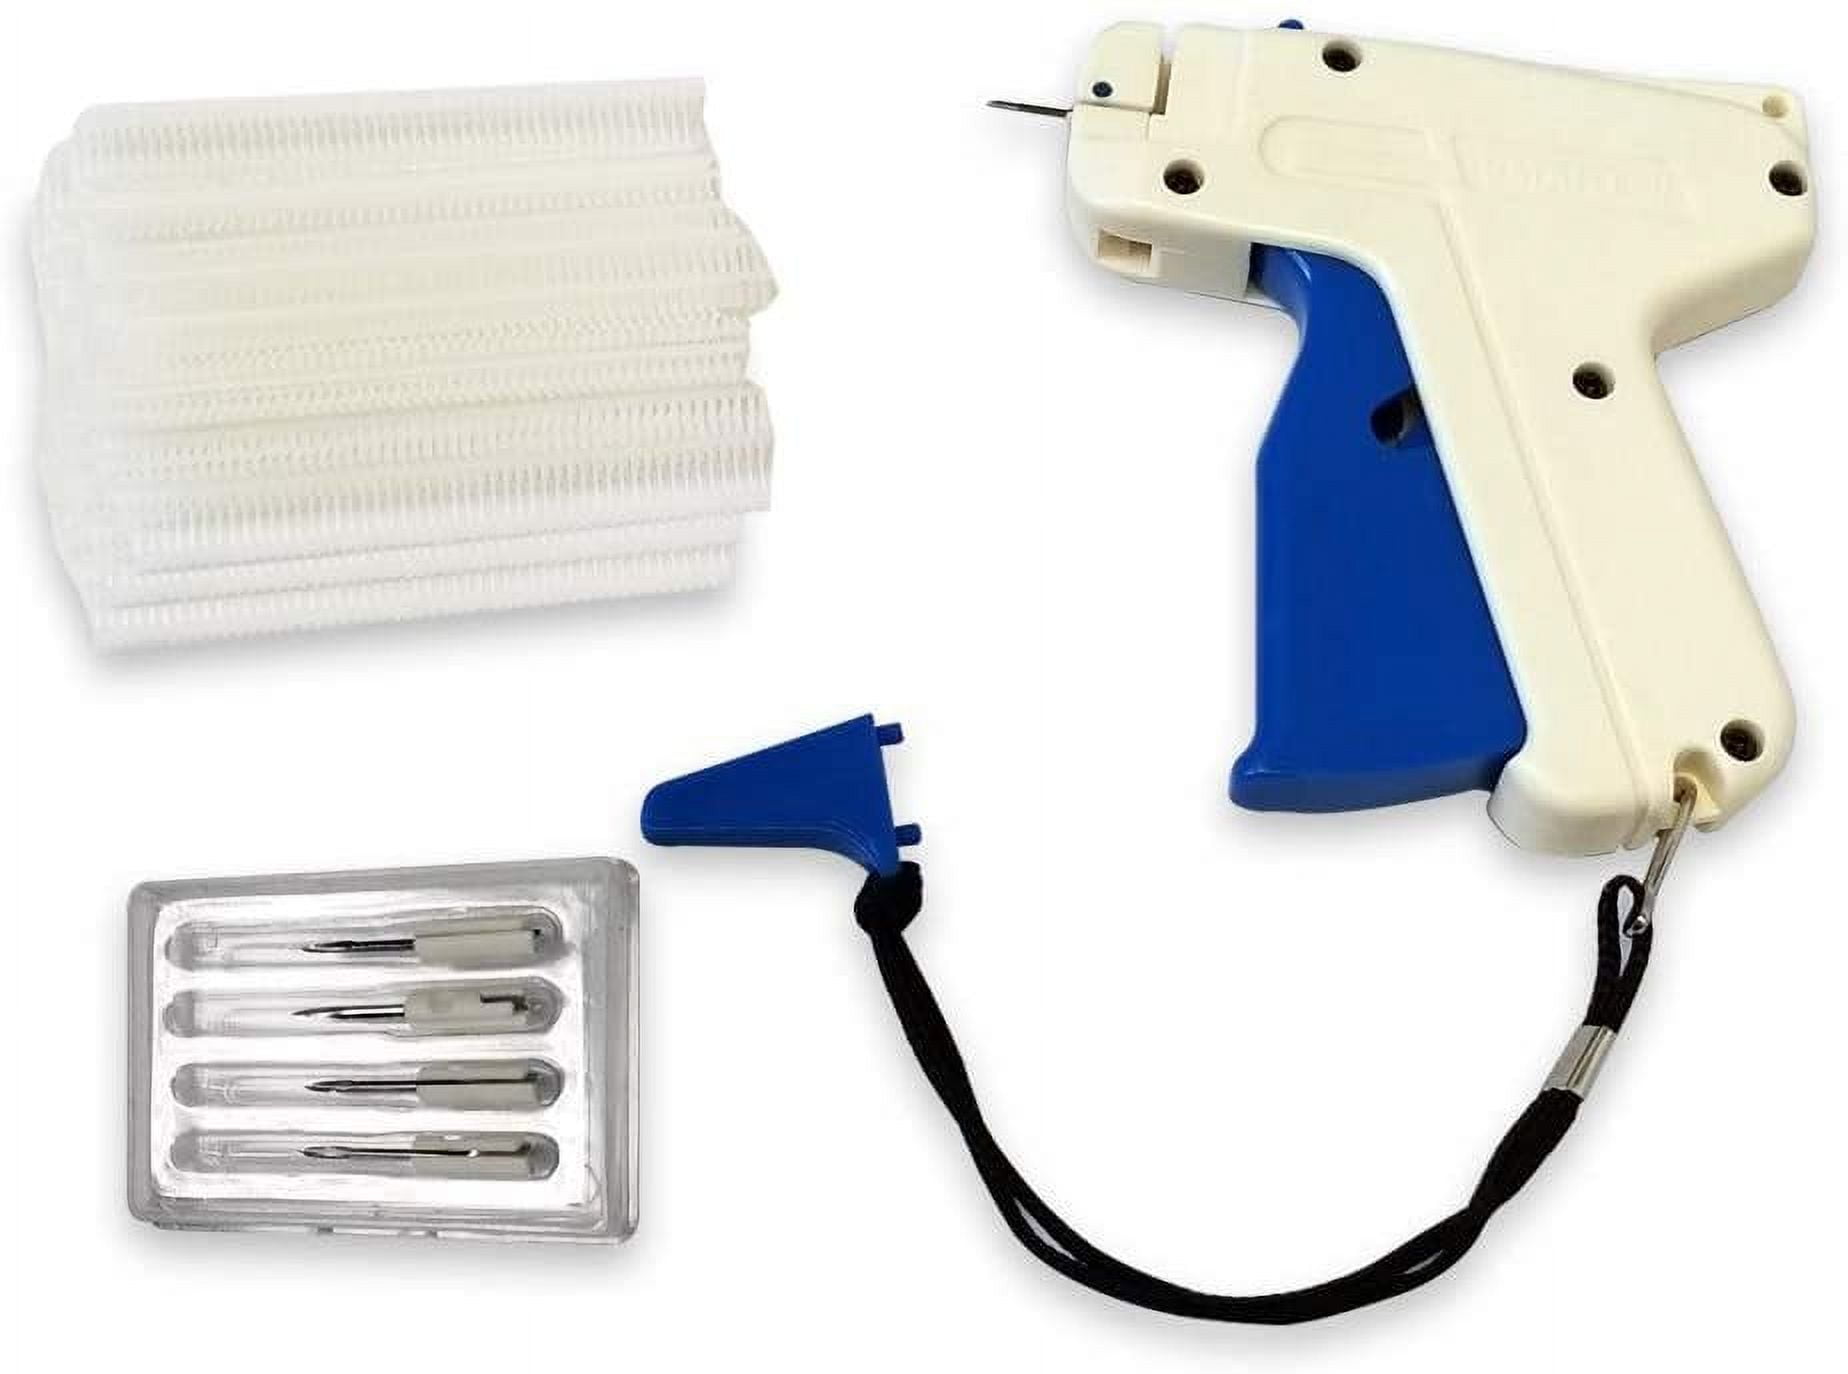  Tagging Gun Kit, Fine Stitch Tagging Gun for Clothing